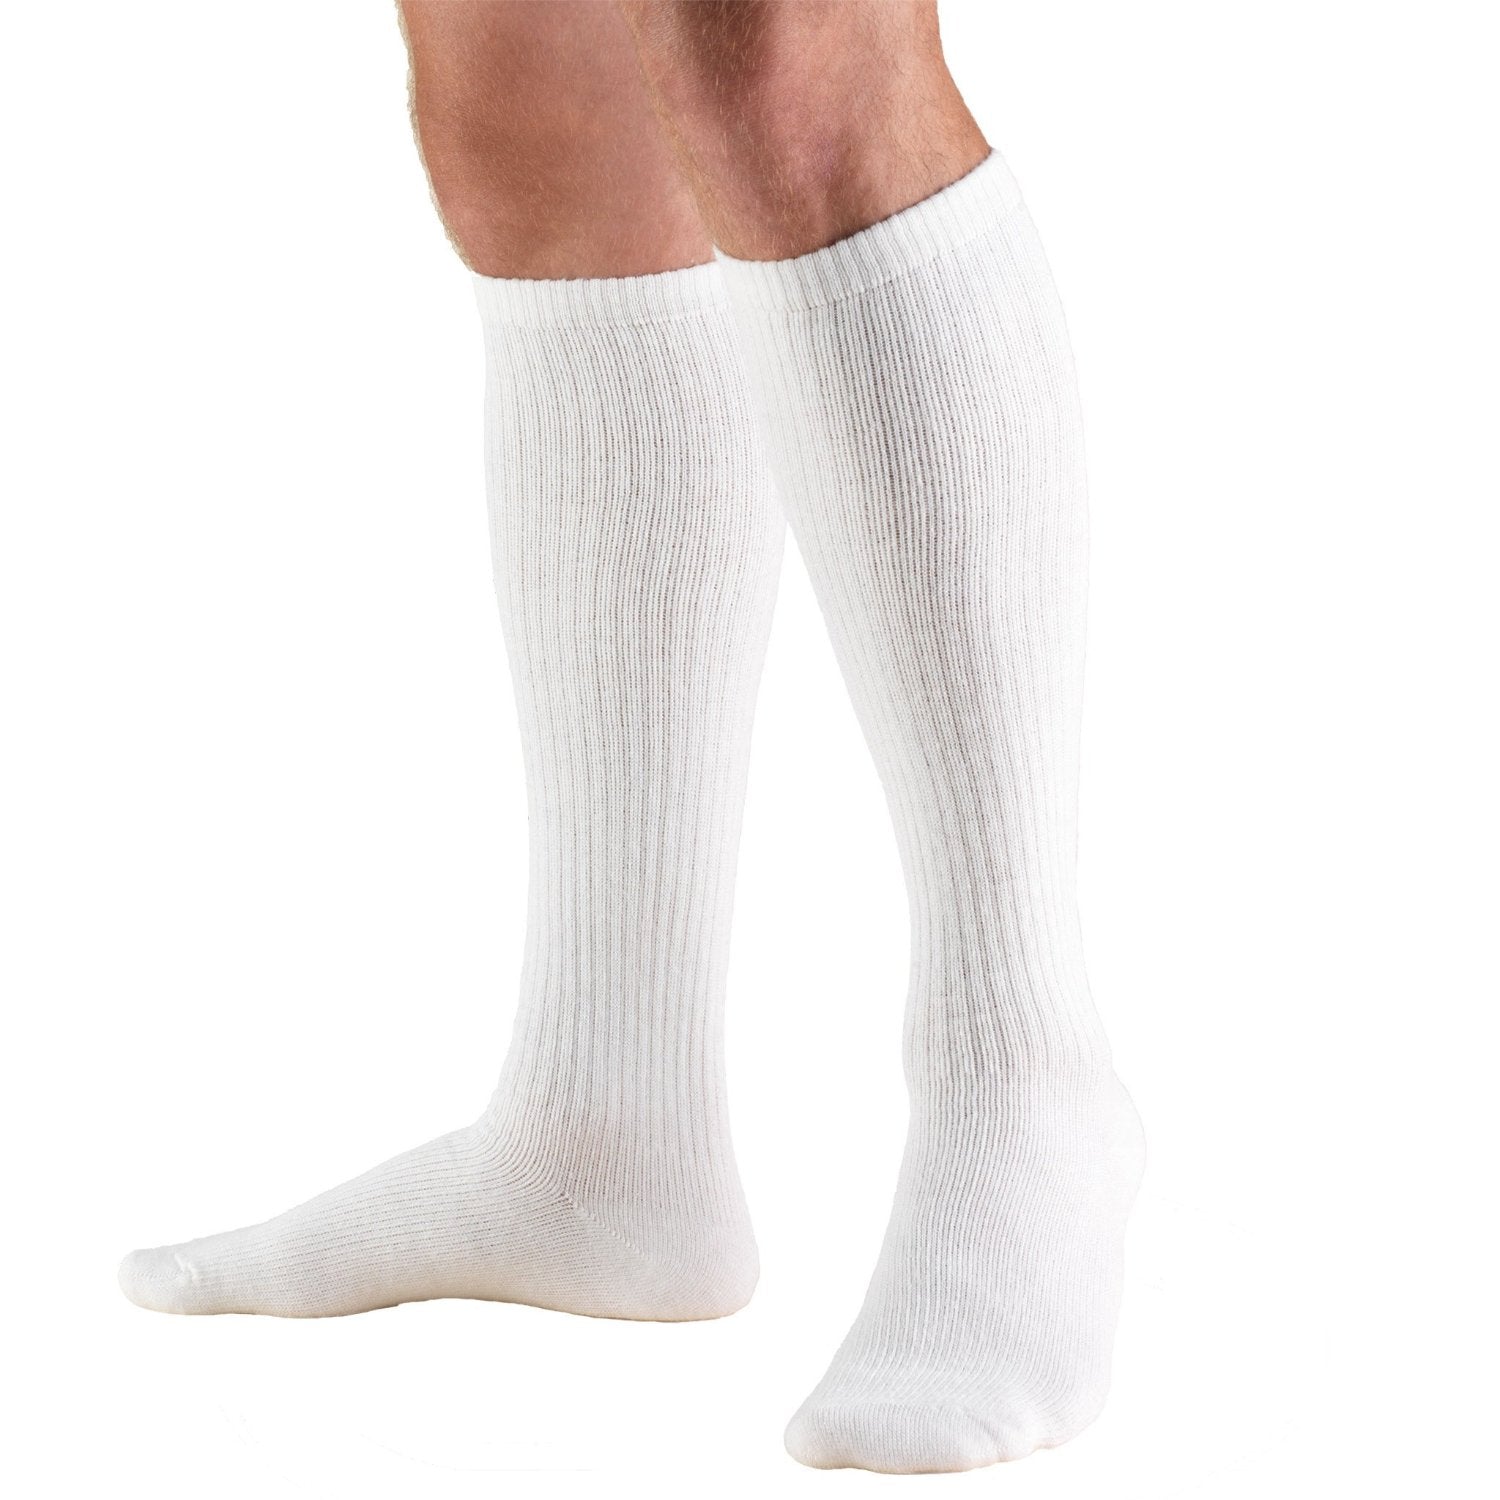 1912 Truform TruSoft Diabetic Socks Knee High 8-15" mmHg Mini-Crew Length Black and White - Midwest DME Supply